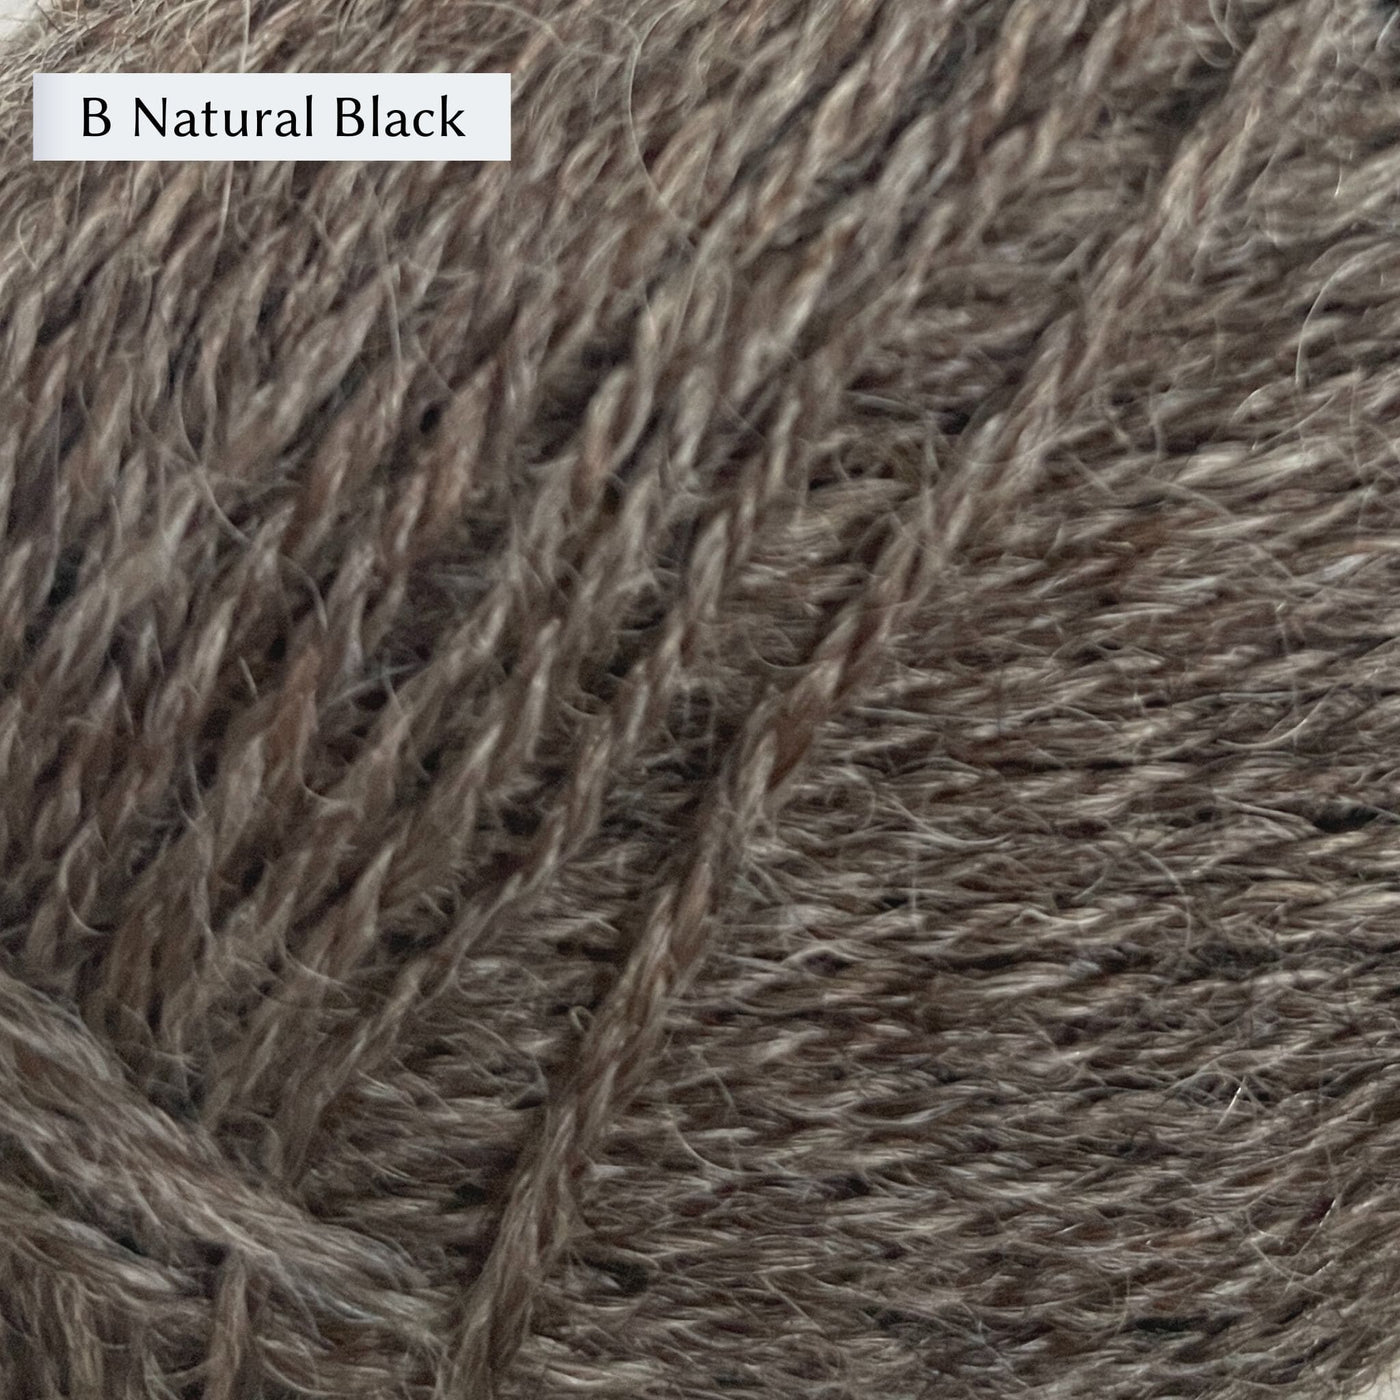 Wensleydale Longwool Sheep Shop 4ply yarn, a fingering weight yarn, in color B Natural Black, a dark warm brown